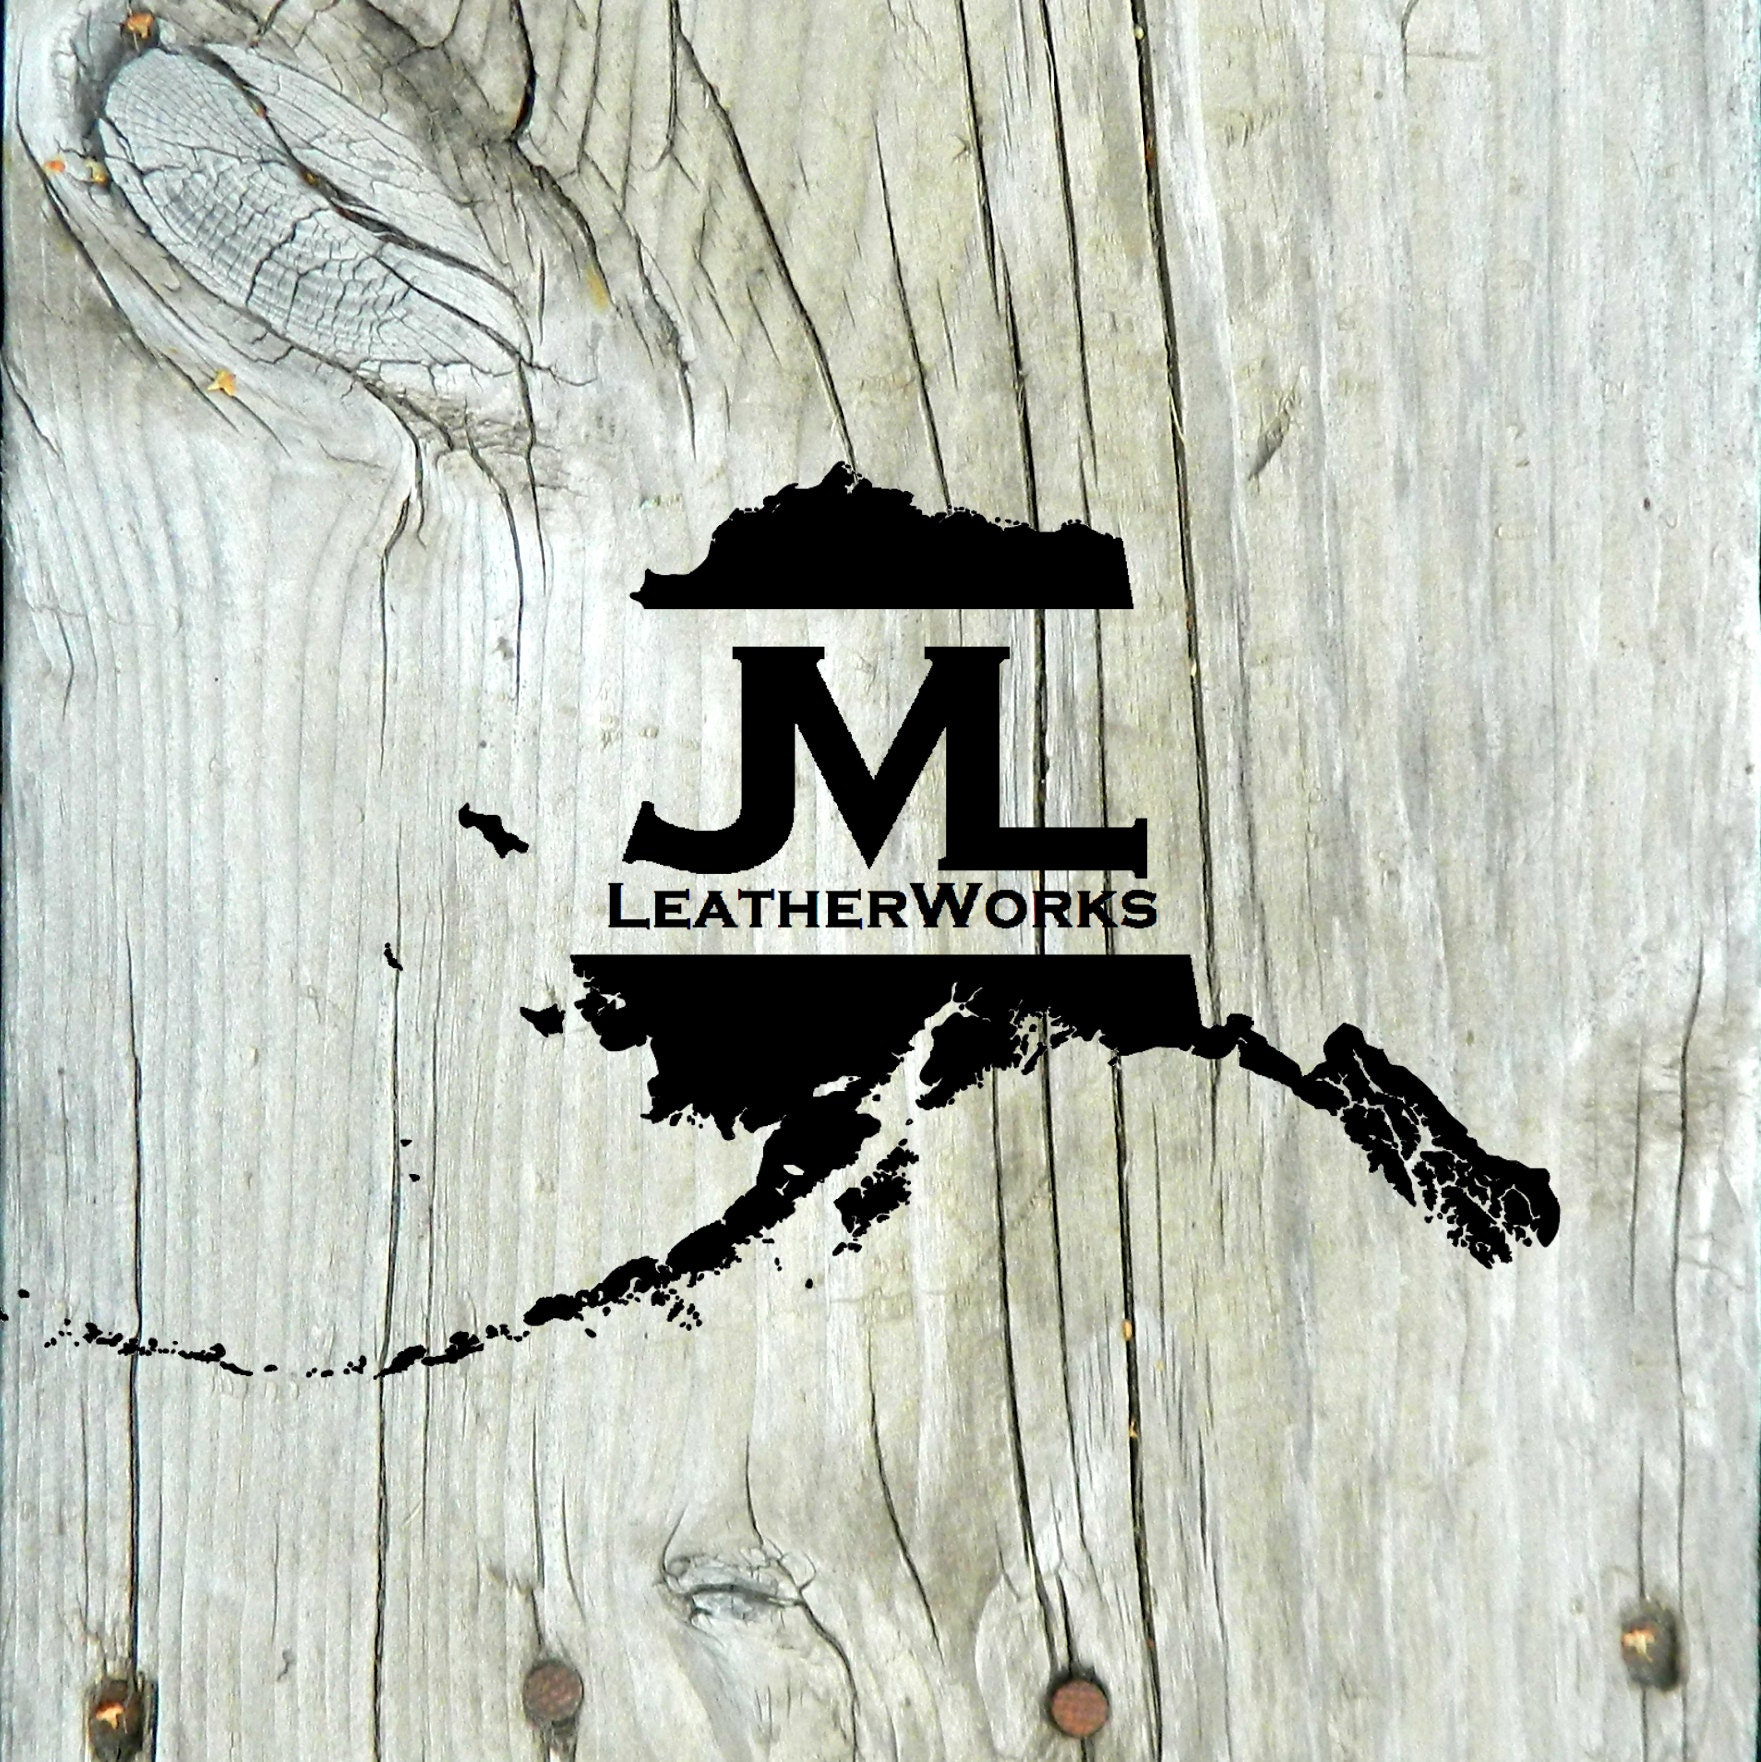 JML Leatherworks